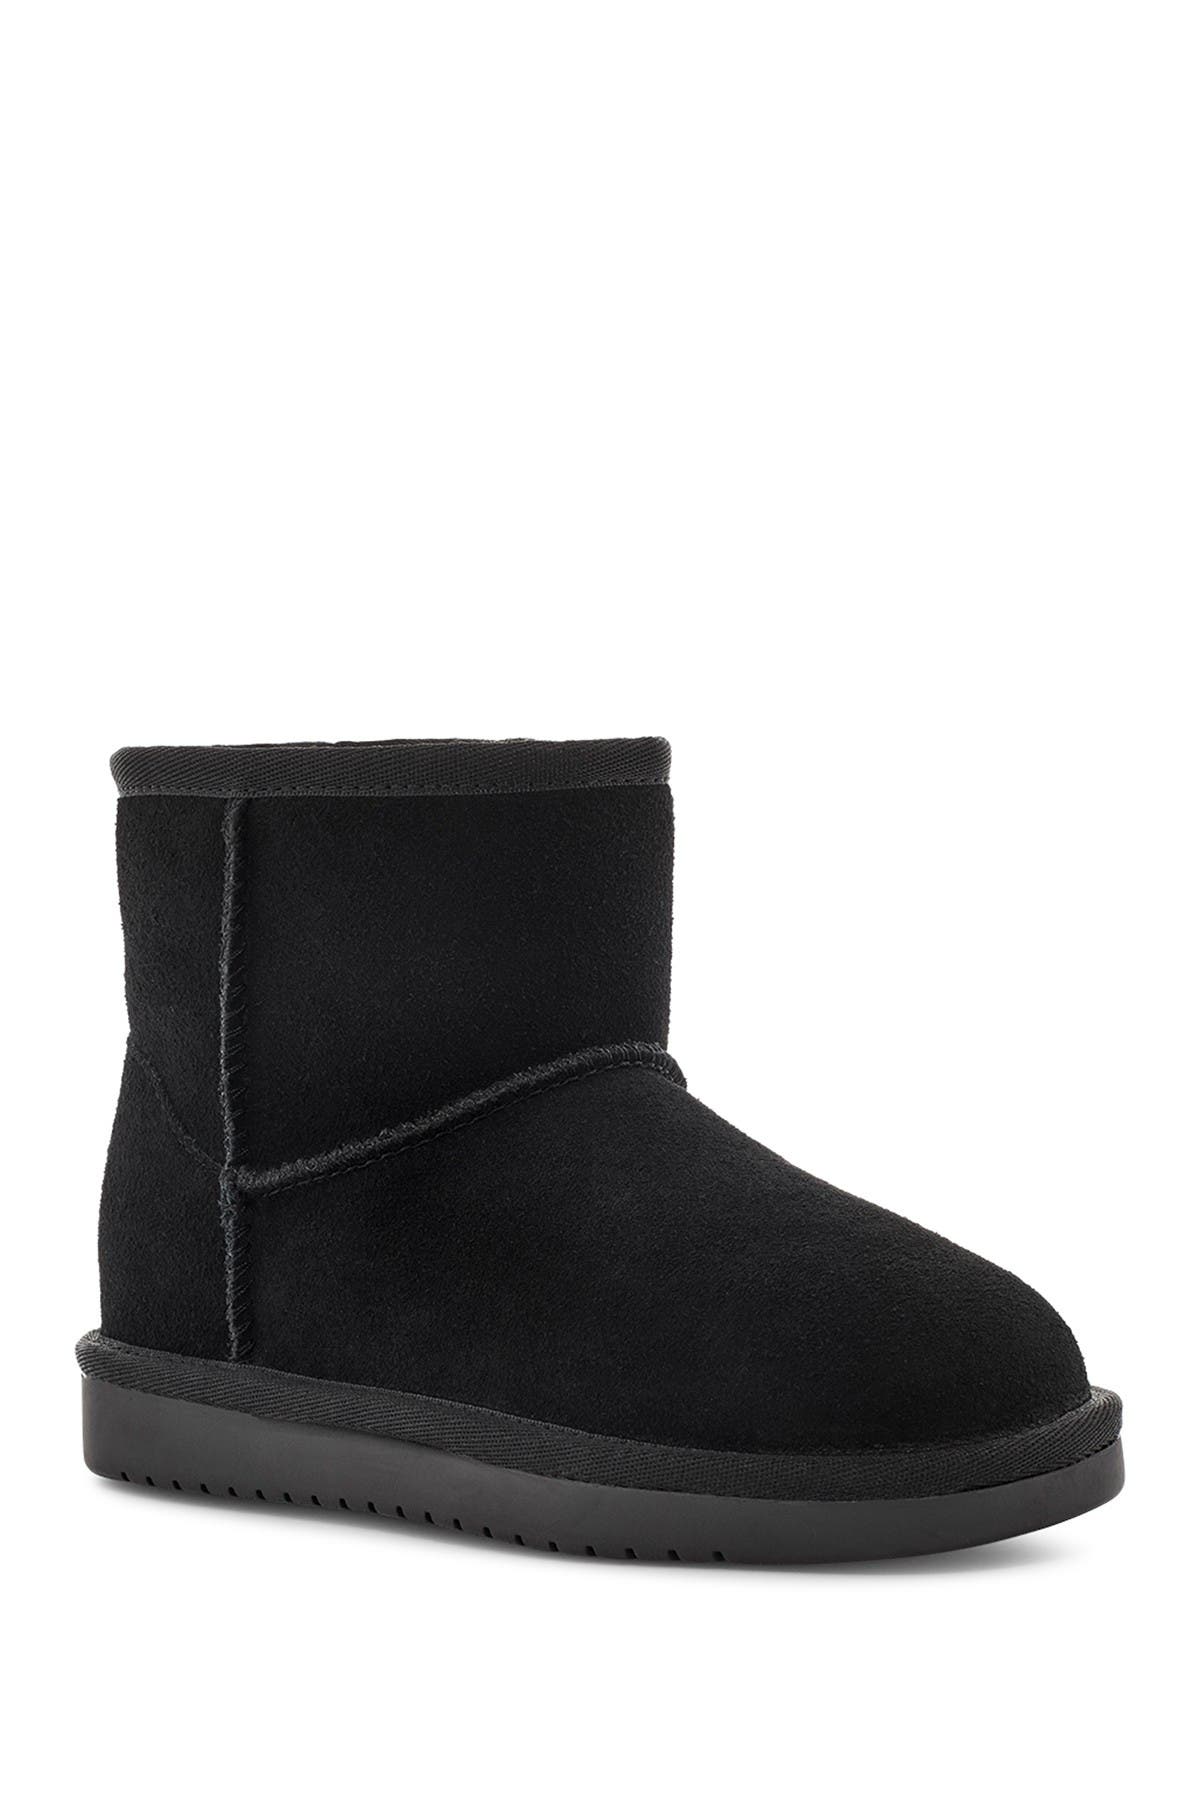 Girls' Winter Boots \u0026 Snow Boots 